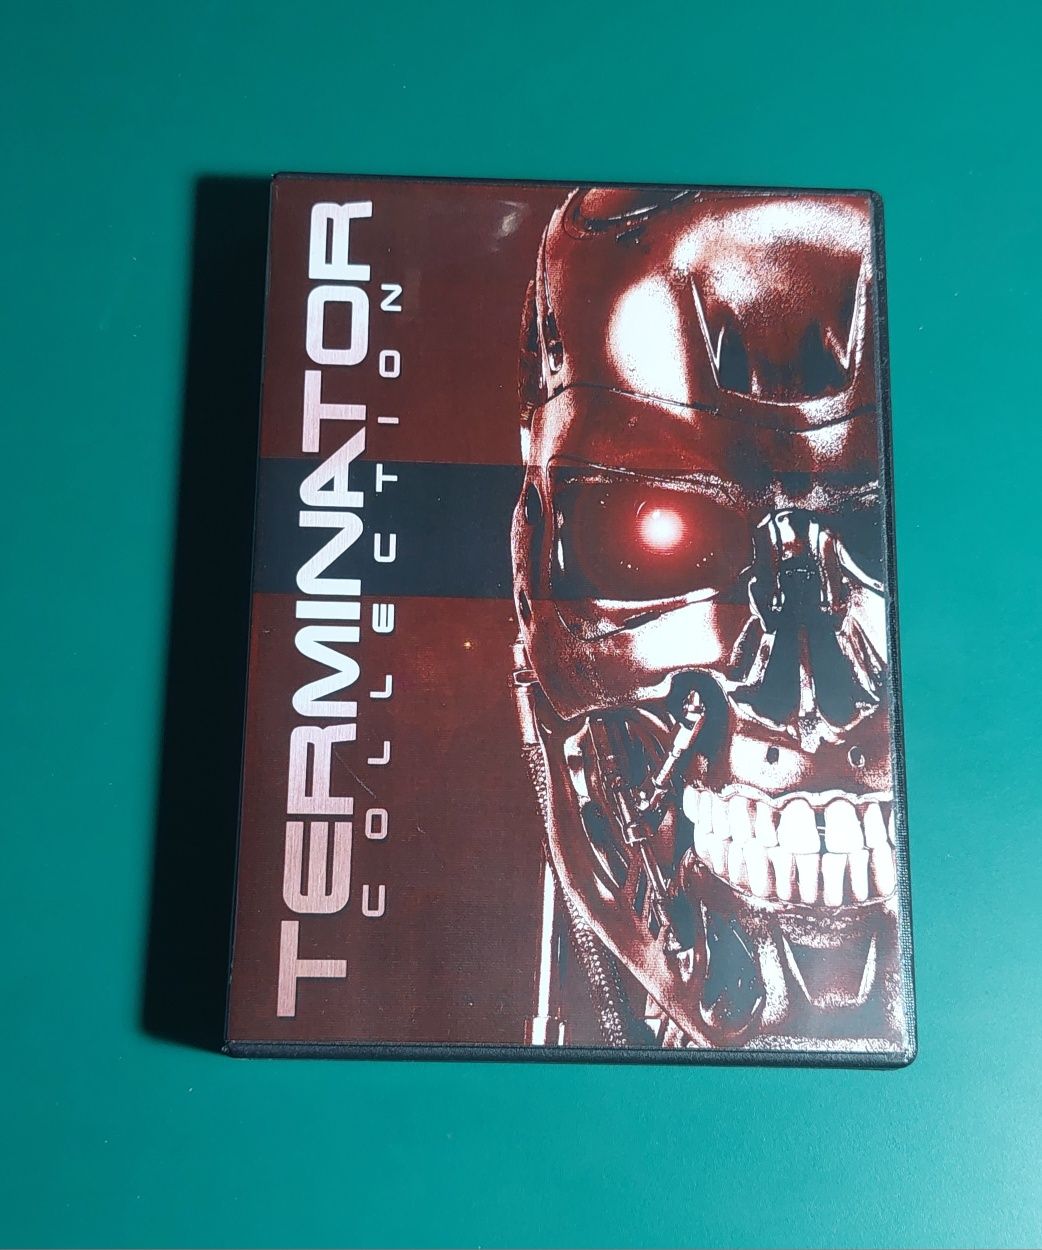 Colectia Terminator / Terminator Collection - 6 DVD - Subtitrat romana